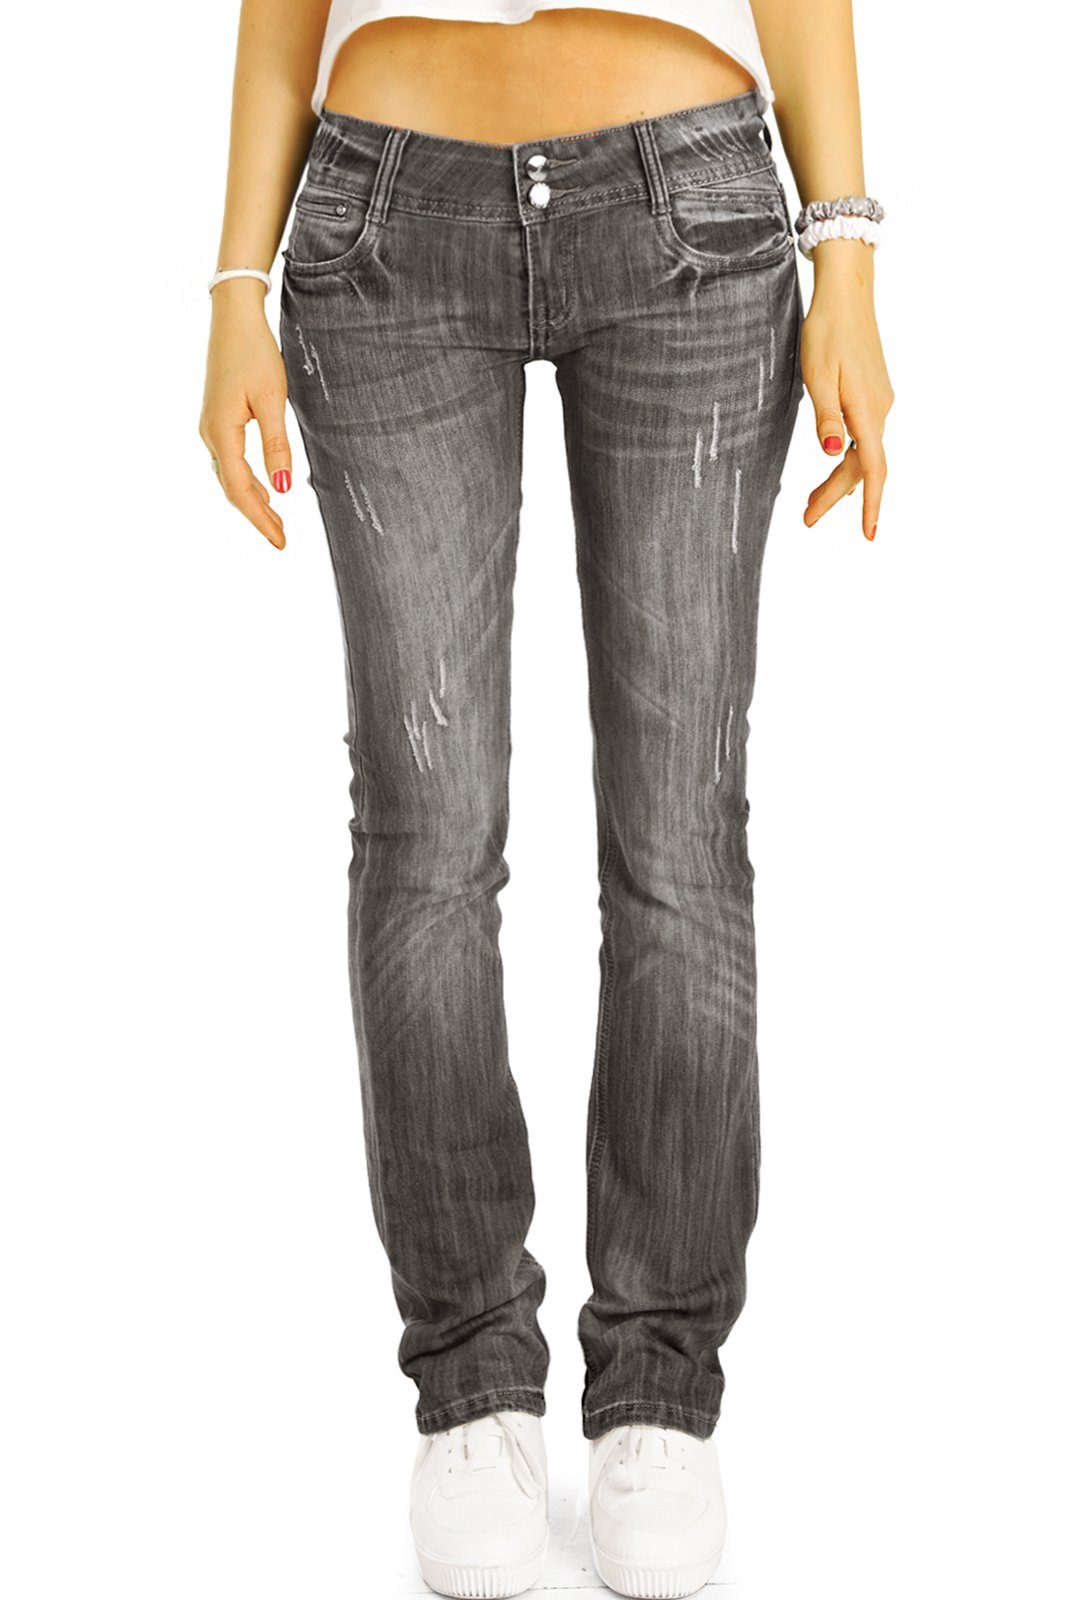 be styled Straight-Jeans low waist Damenjeans, gerade geschnittene Hüfthose j137p-straight 5-pocket